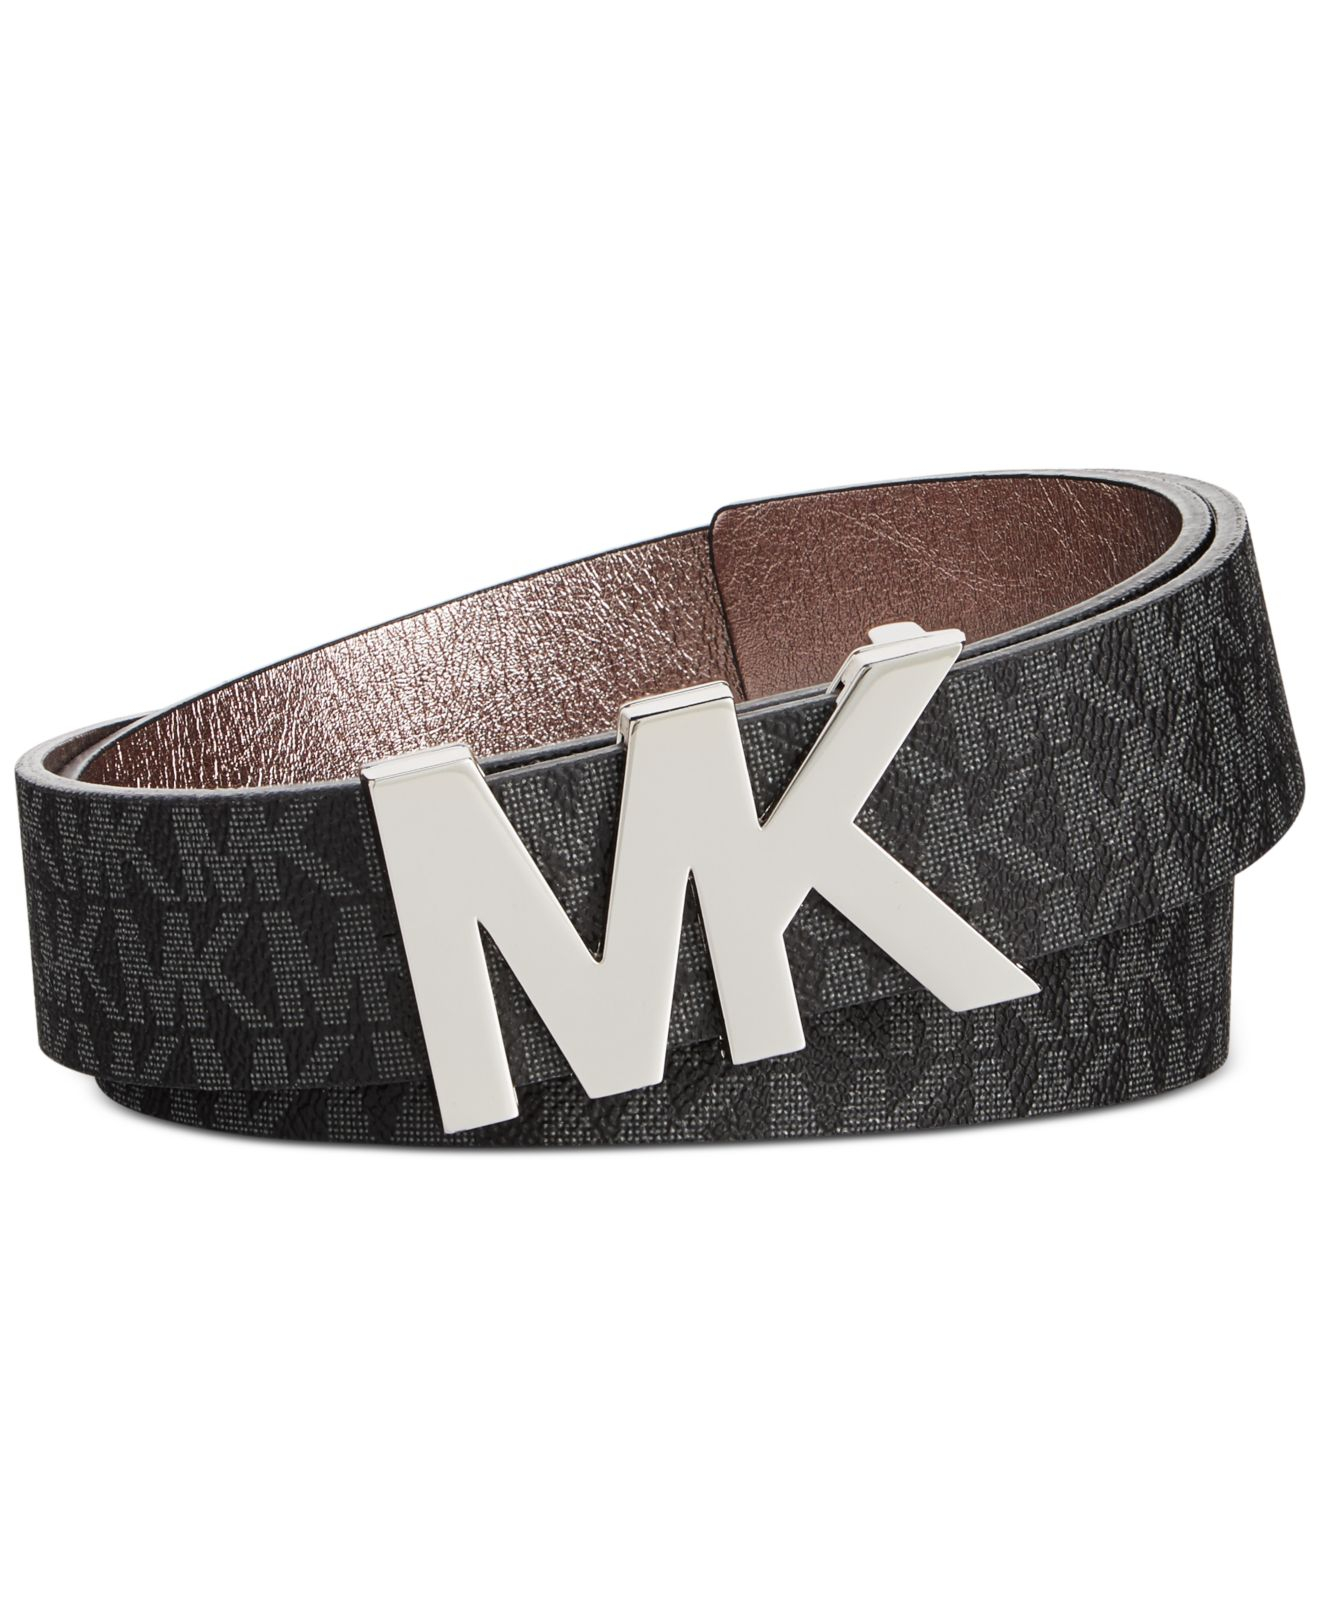 black mk belts